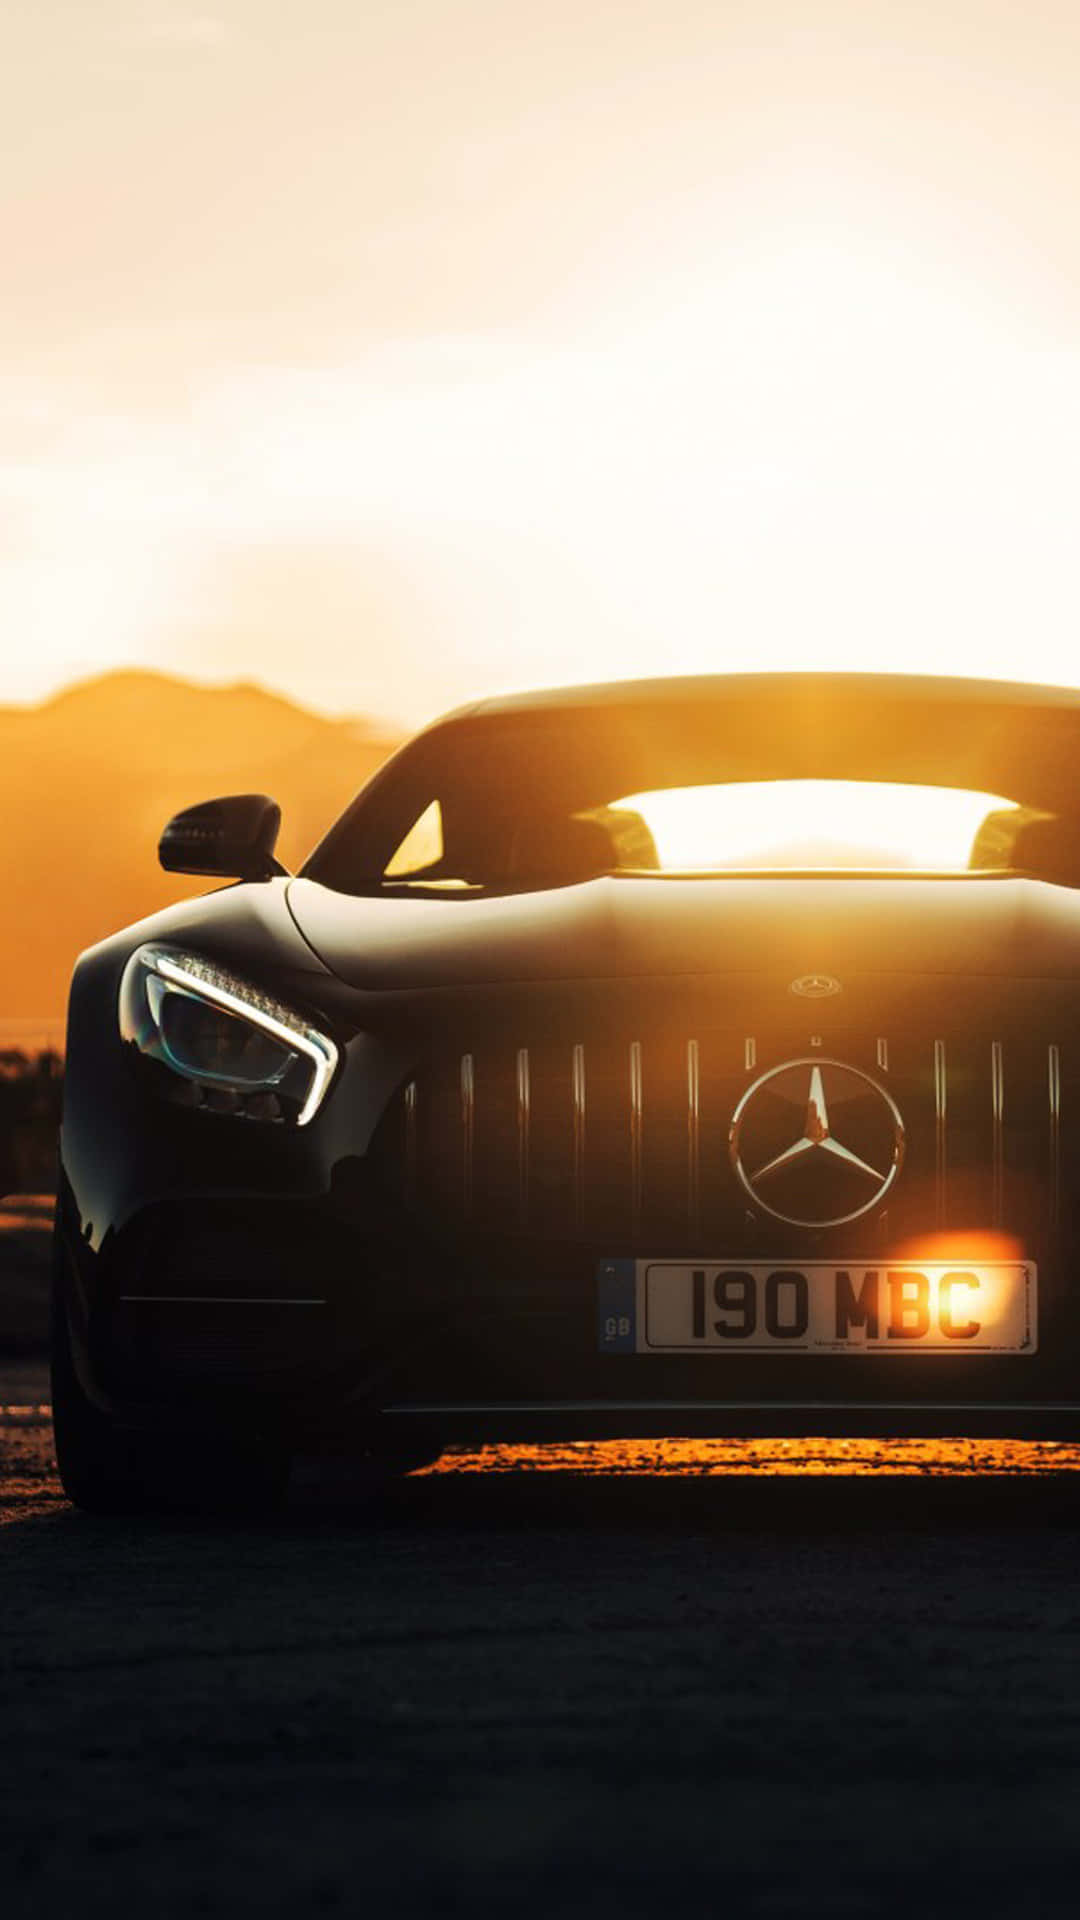 A luxurious combo of the modern, cutting-edge iPhone X alongside a sleek, state-of-the-art Mercedes